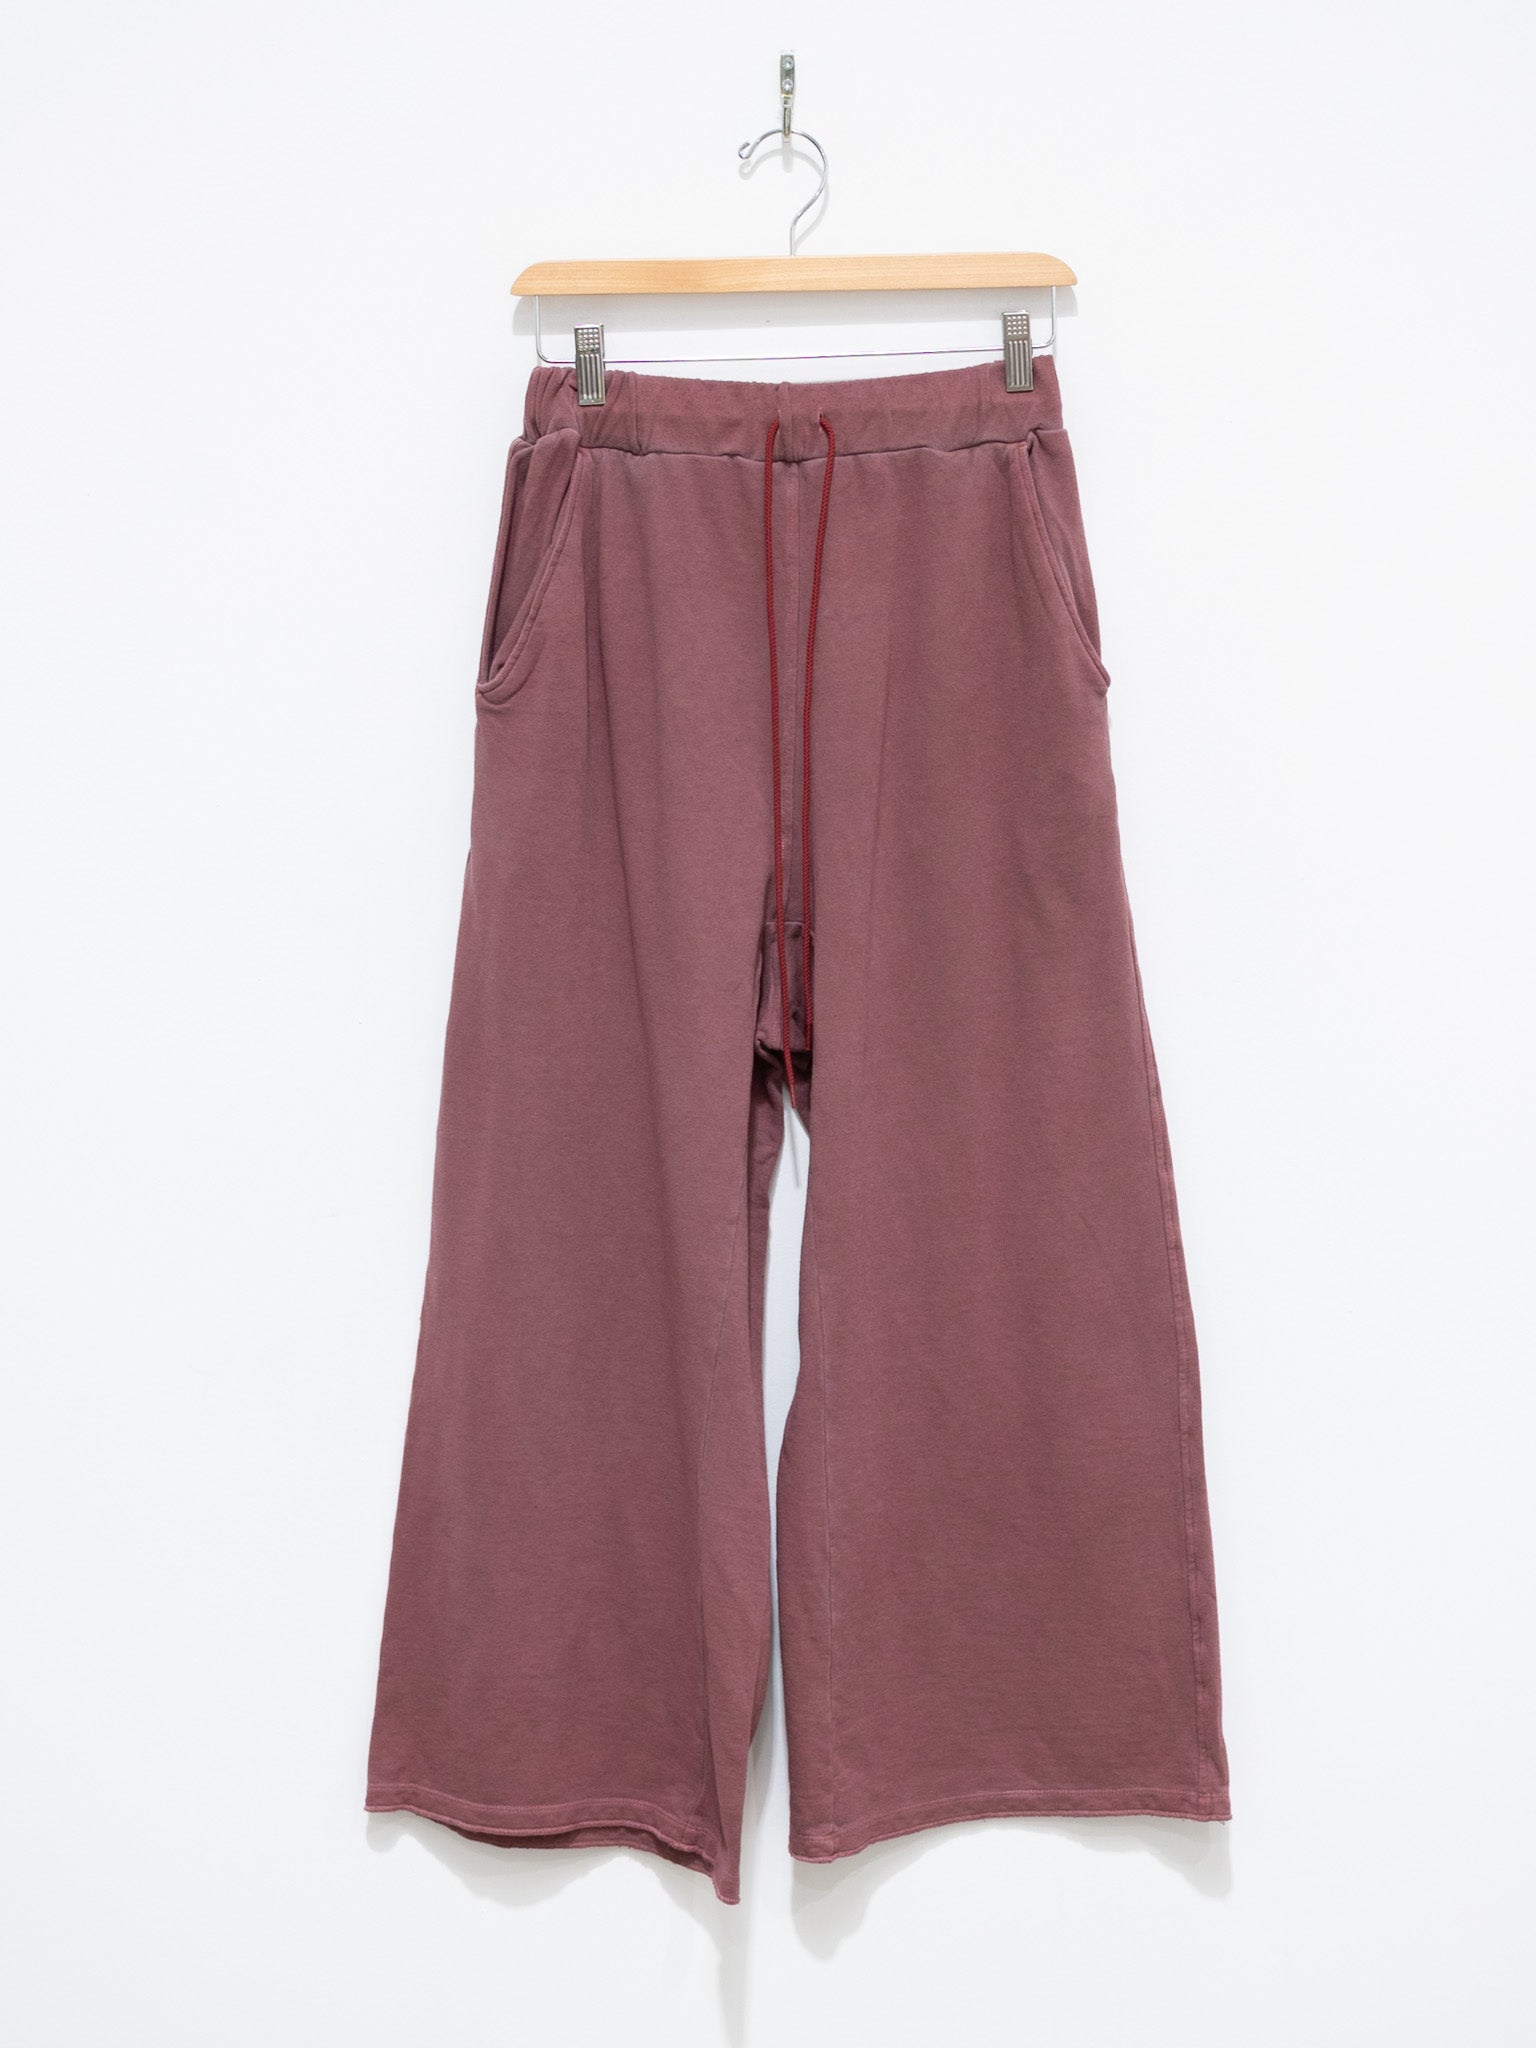 Namu Shop - ICHI Pigment Dyed Sweatpants - Red